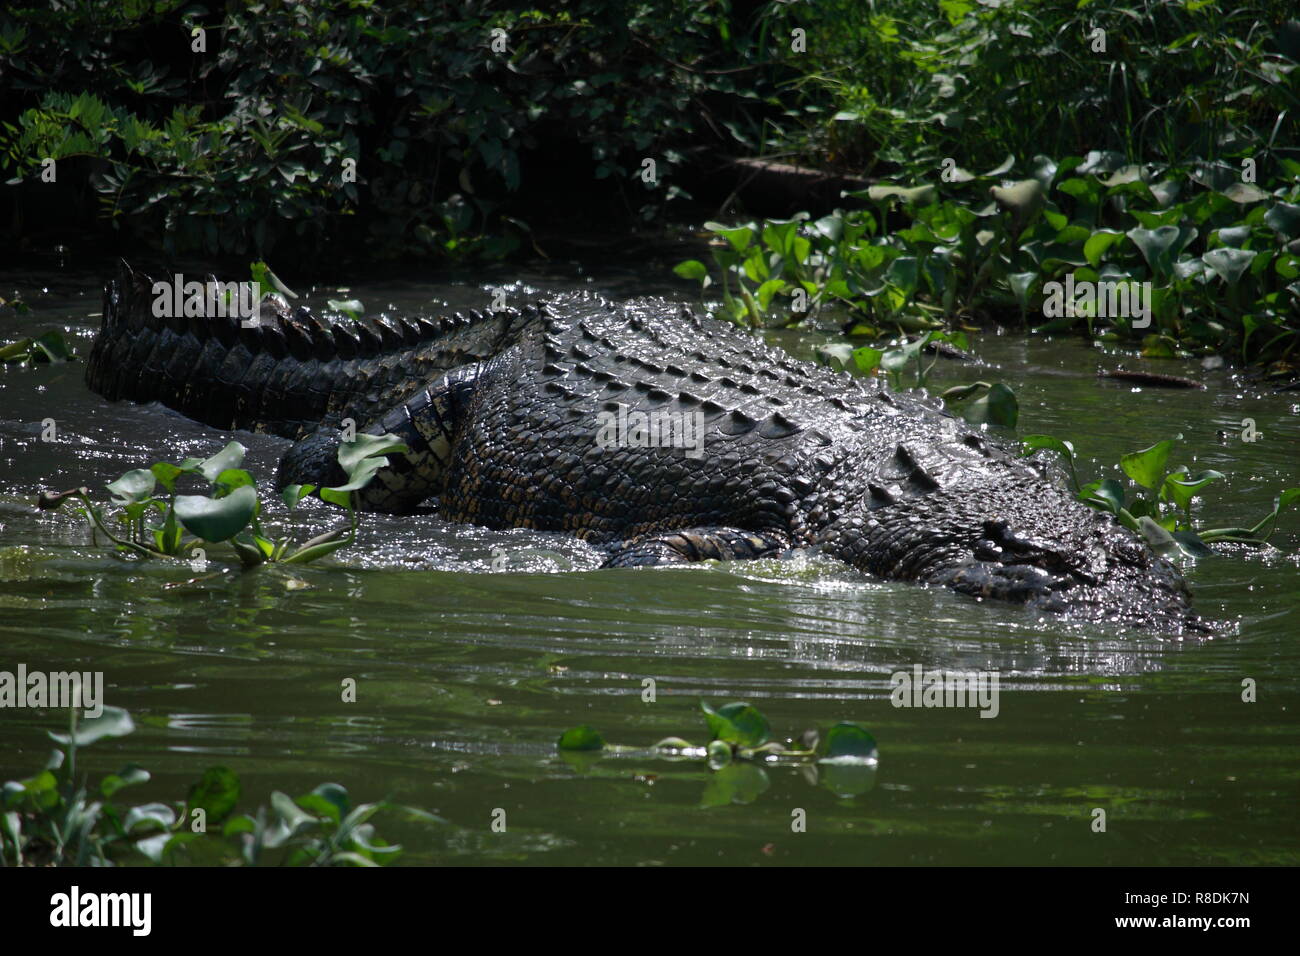 Wildlife photo, image of big crocodile swimming in lake, crocodylus porosus Stock Photo